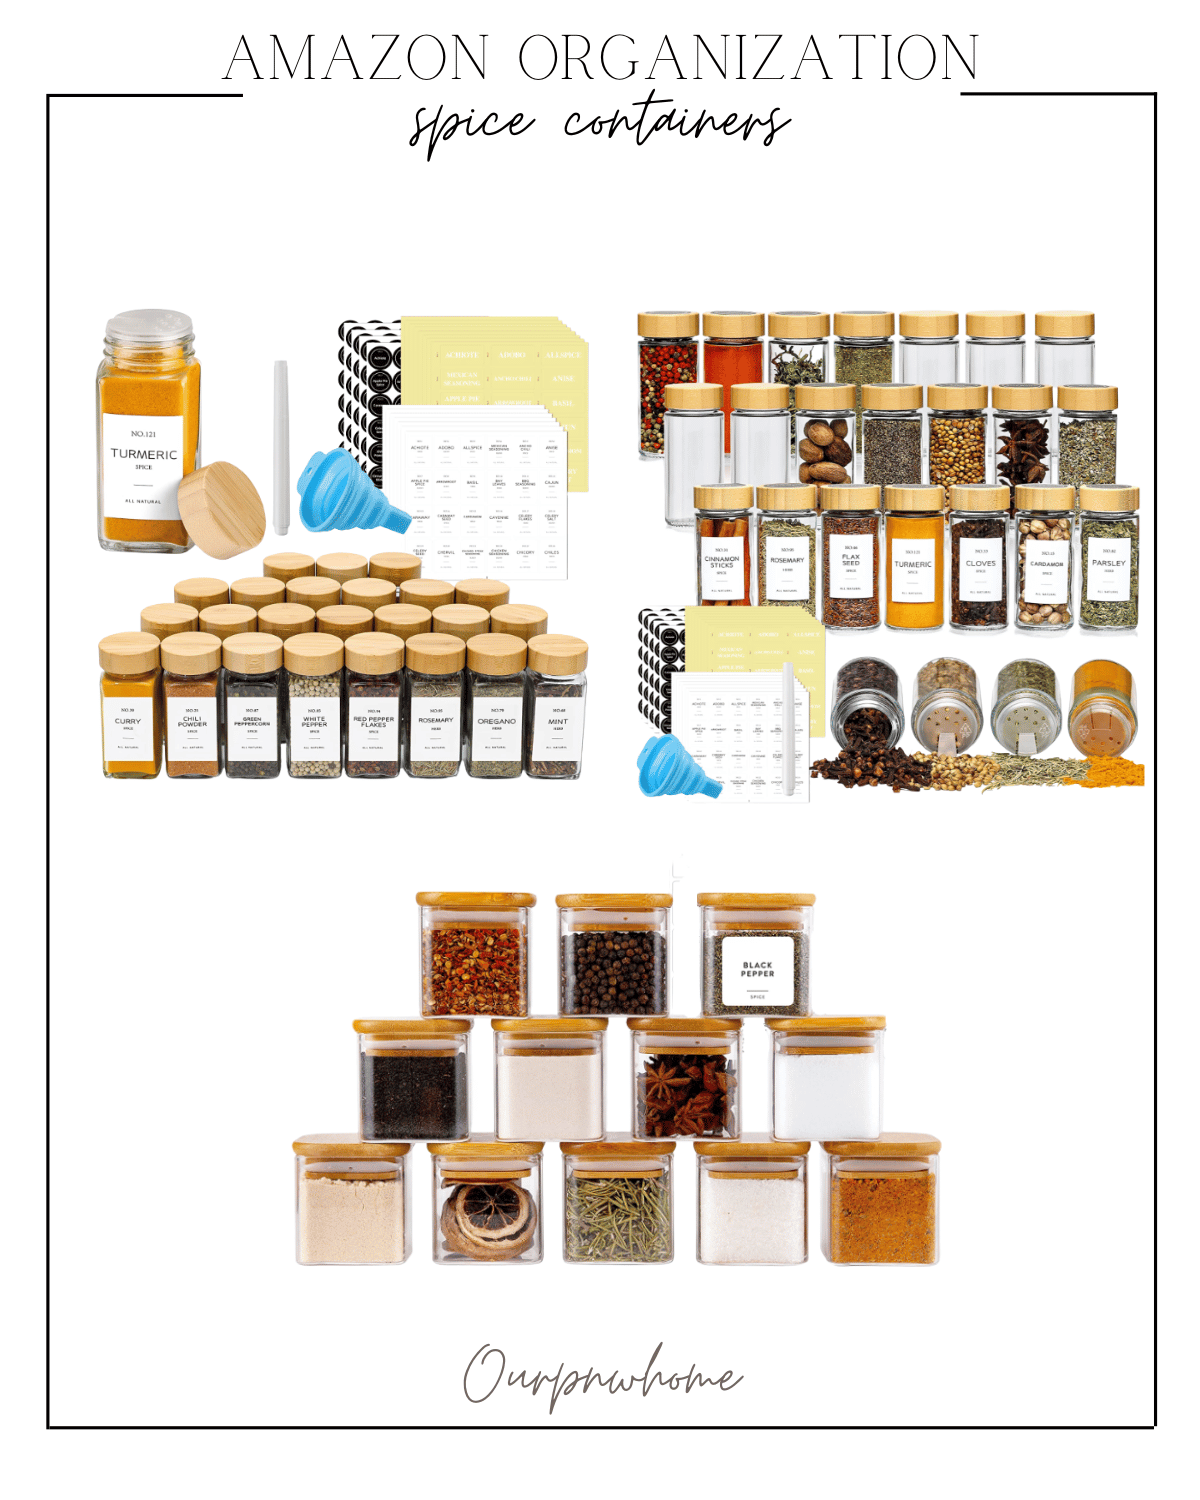 spice jar containers, spice organizers, spice labels, spice organization, amazon storage, amazon organization 